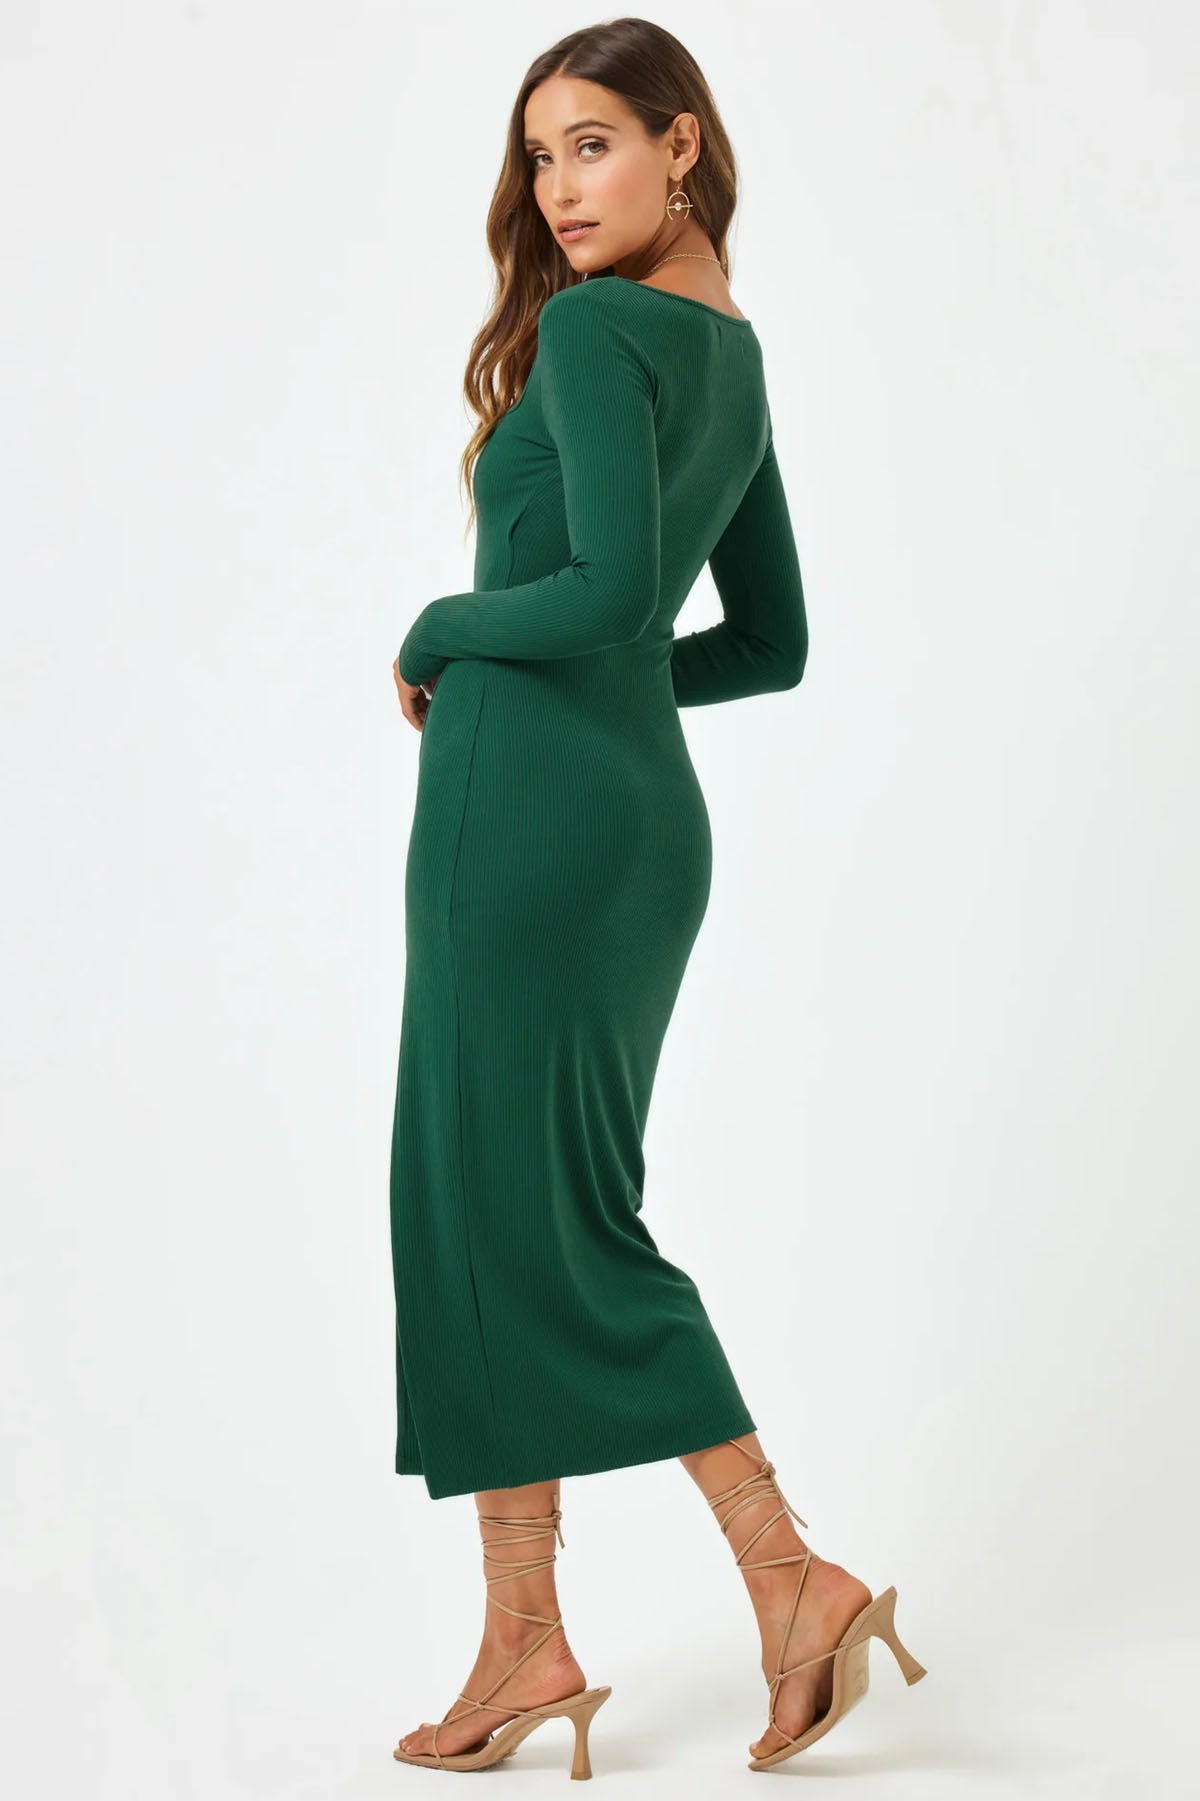 L*Space - Windsor Dress - Emerald - Back